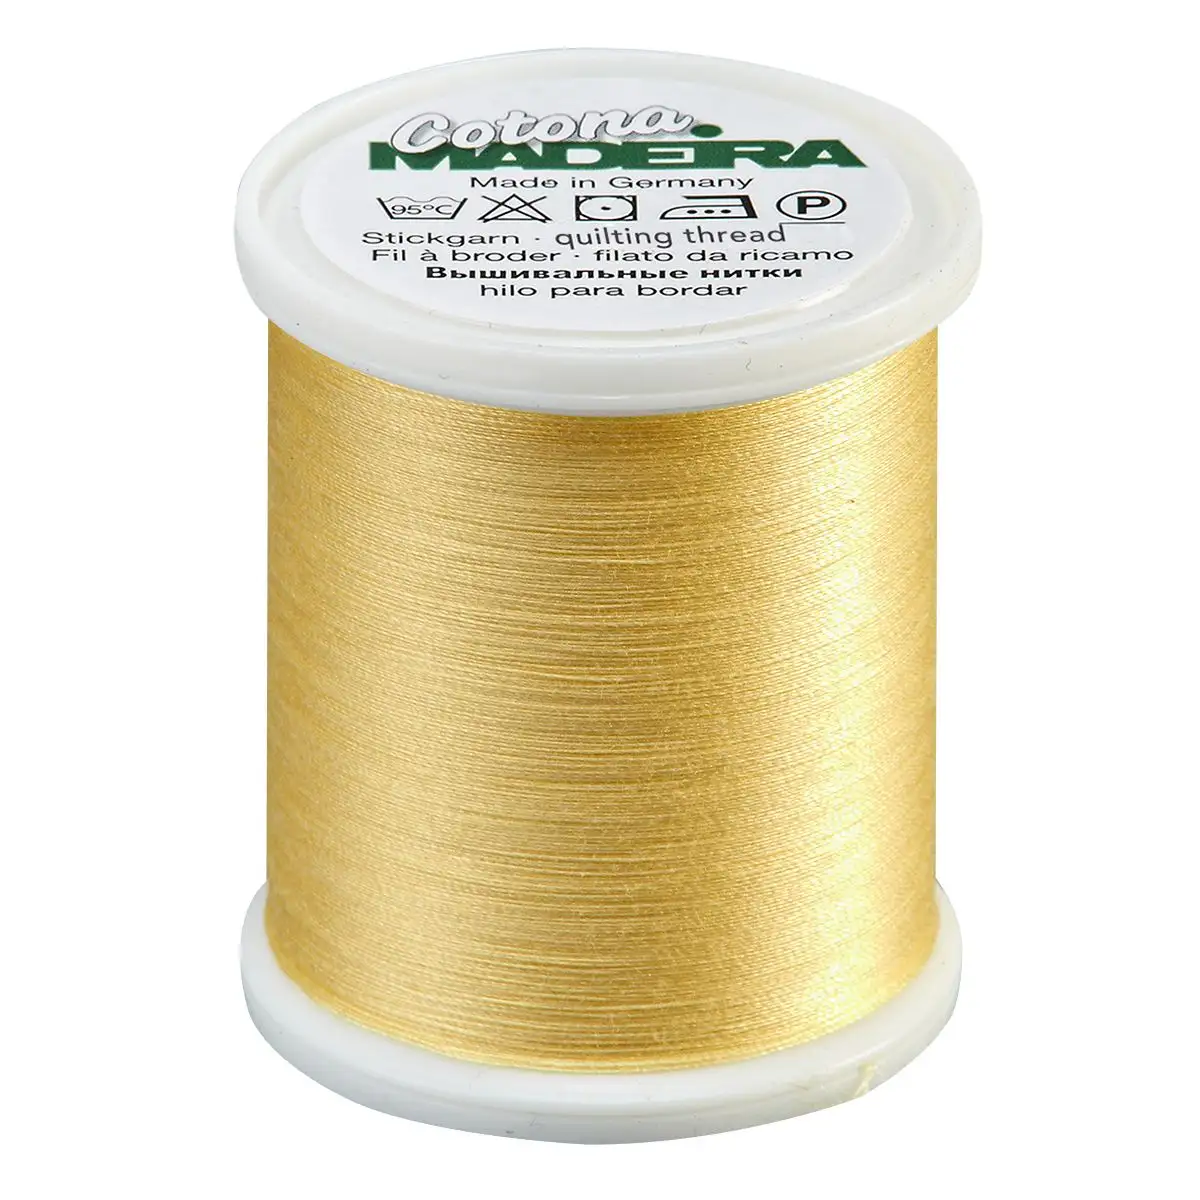 Madeira Cotona 50wt Cotton - 610 Pale Yellow